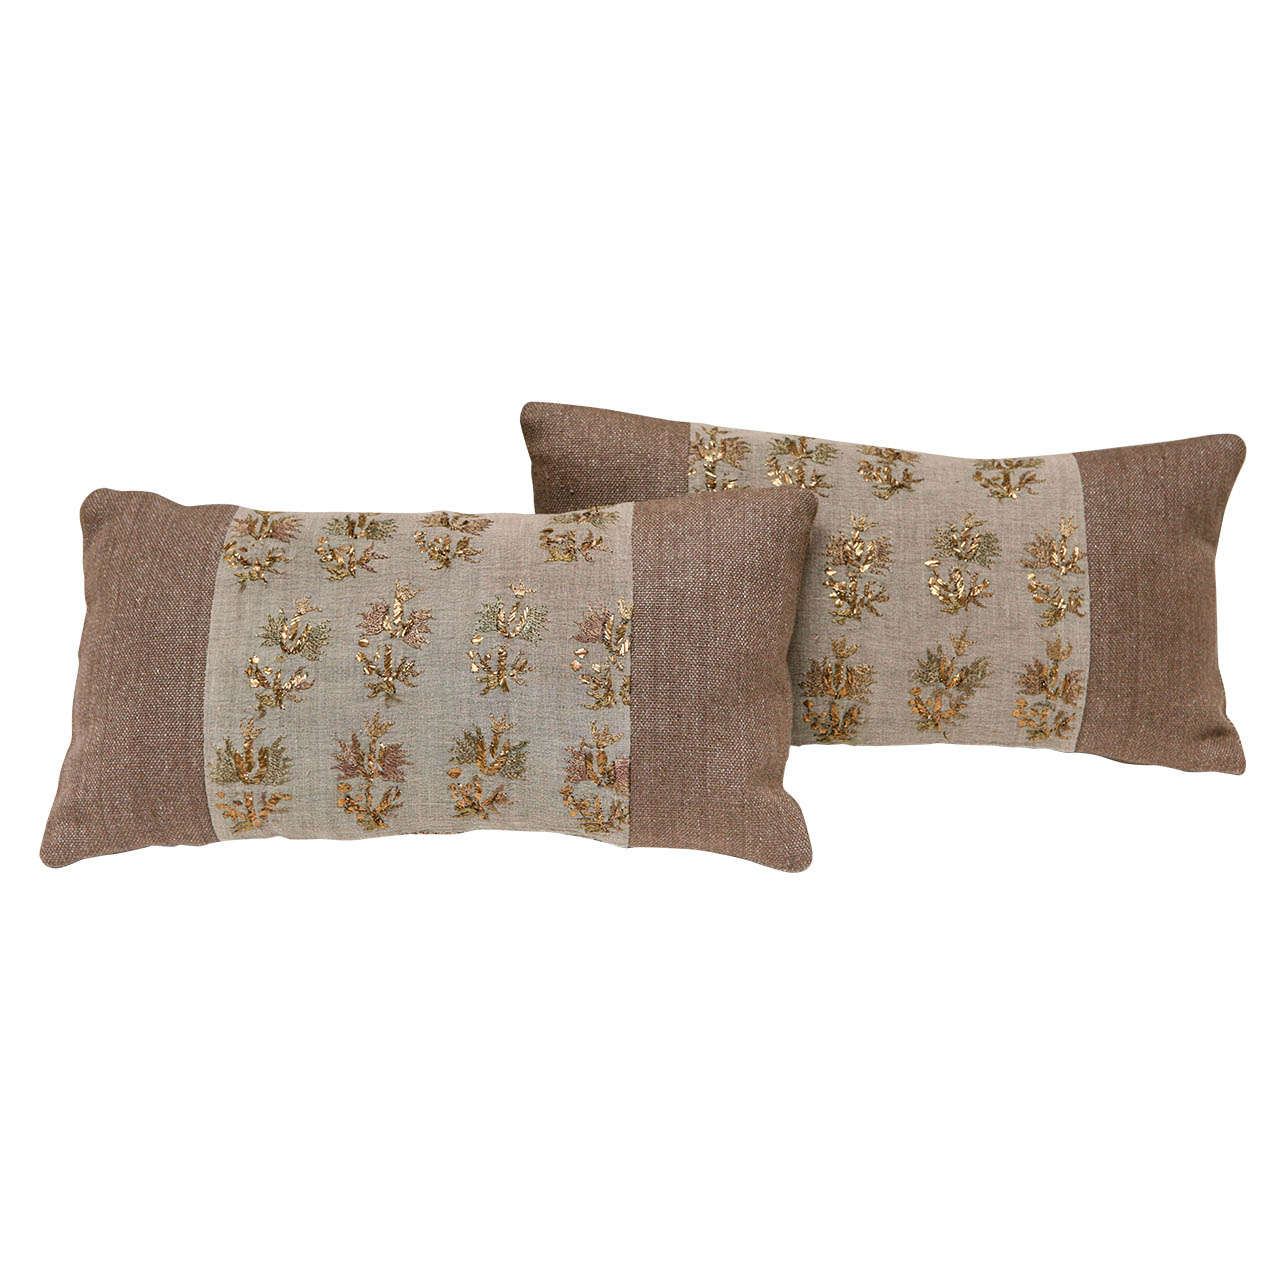 Ottoman Turkish Textile Accent Pillow For Sale